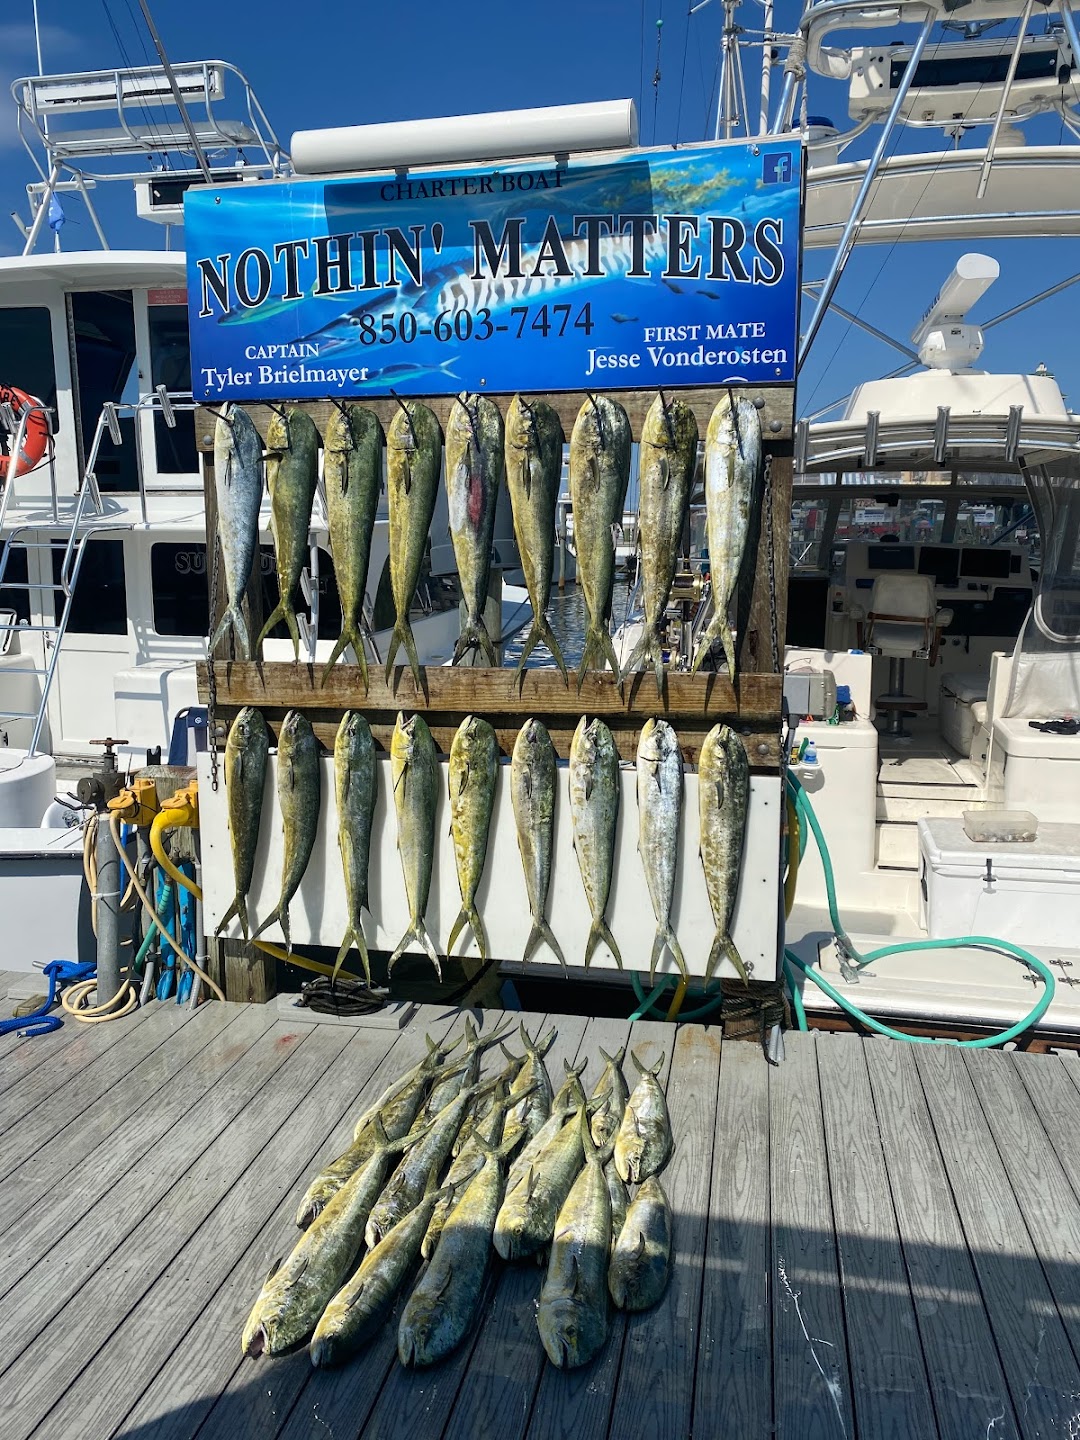 NOTHIN MATTERS FISHING CHARTERS